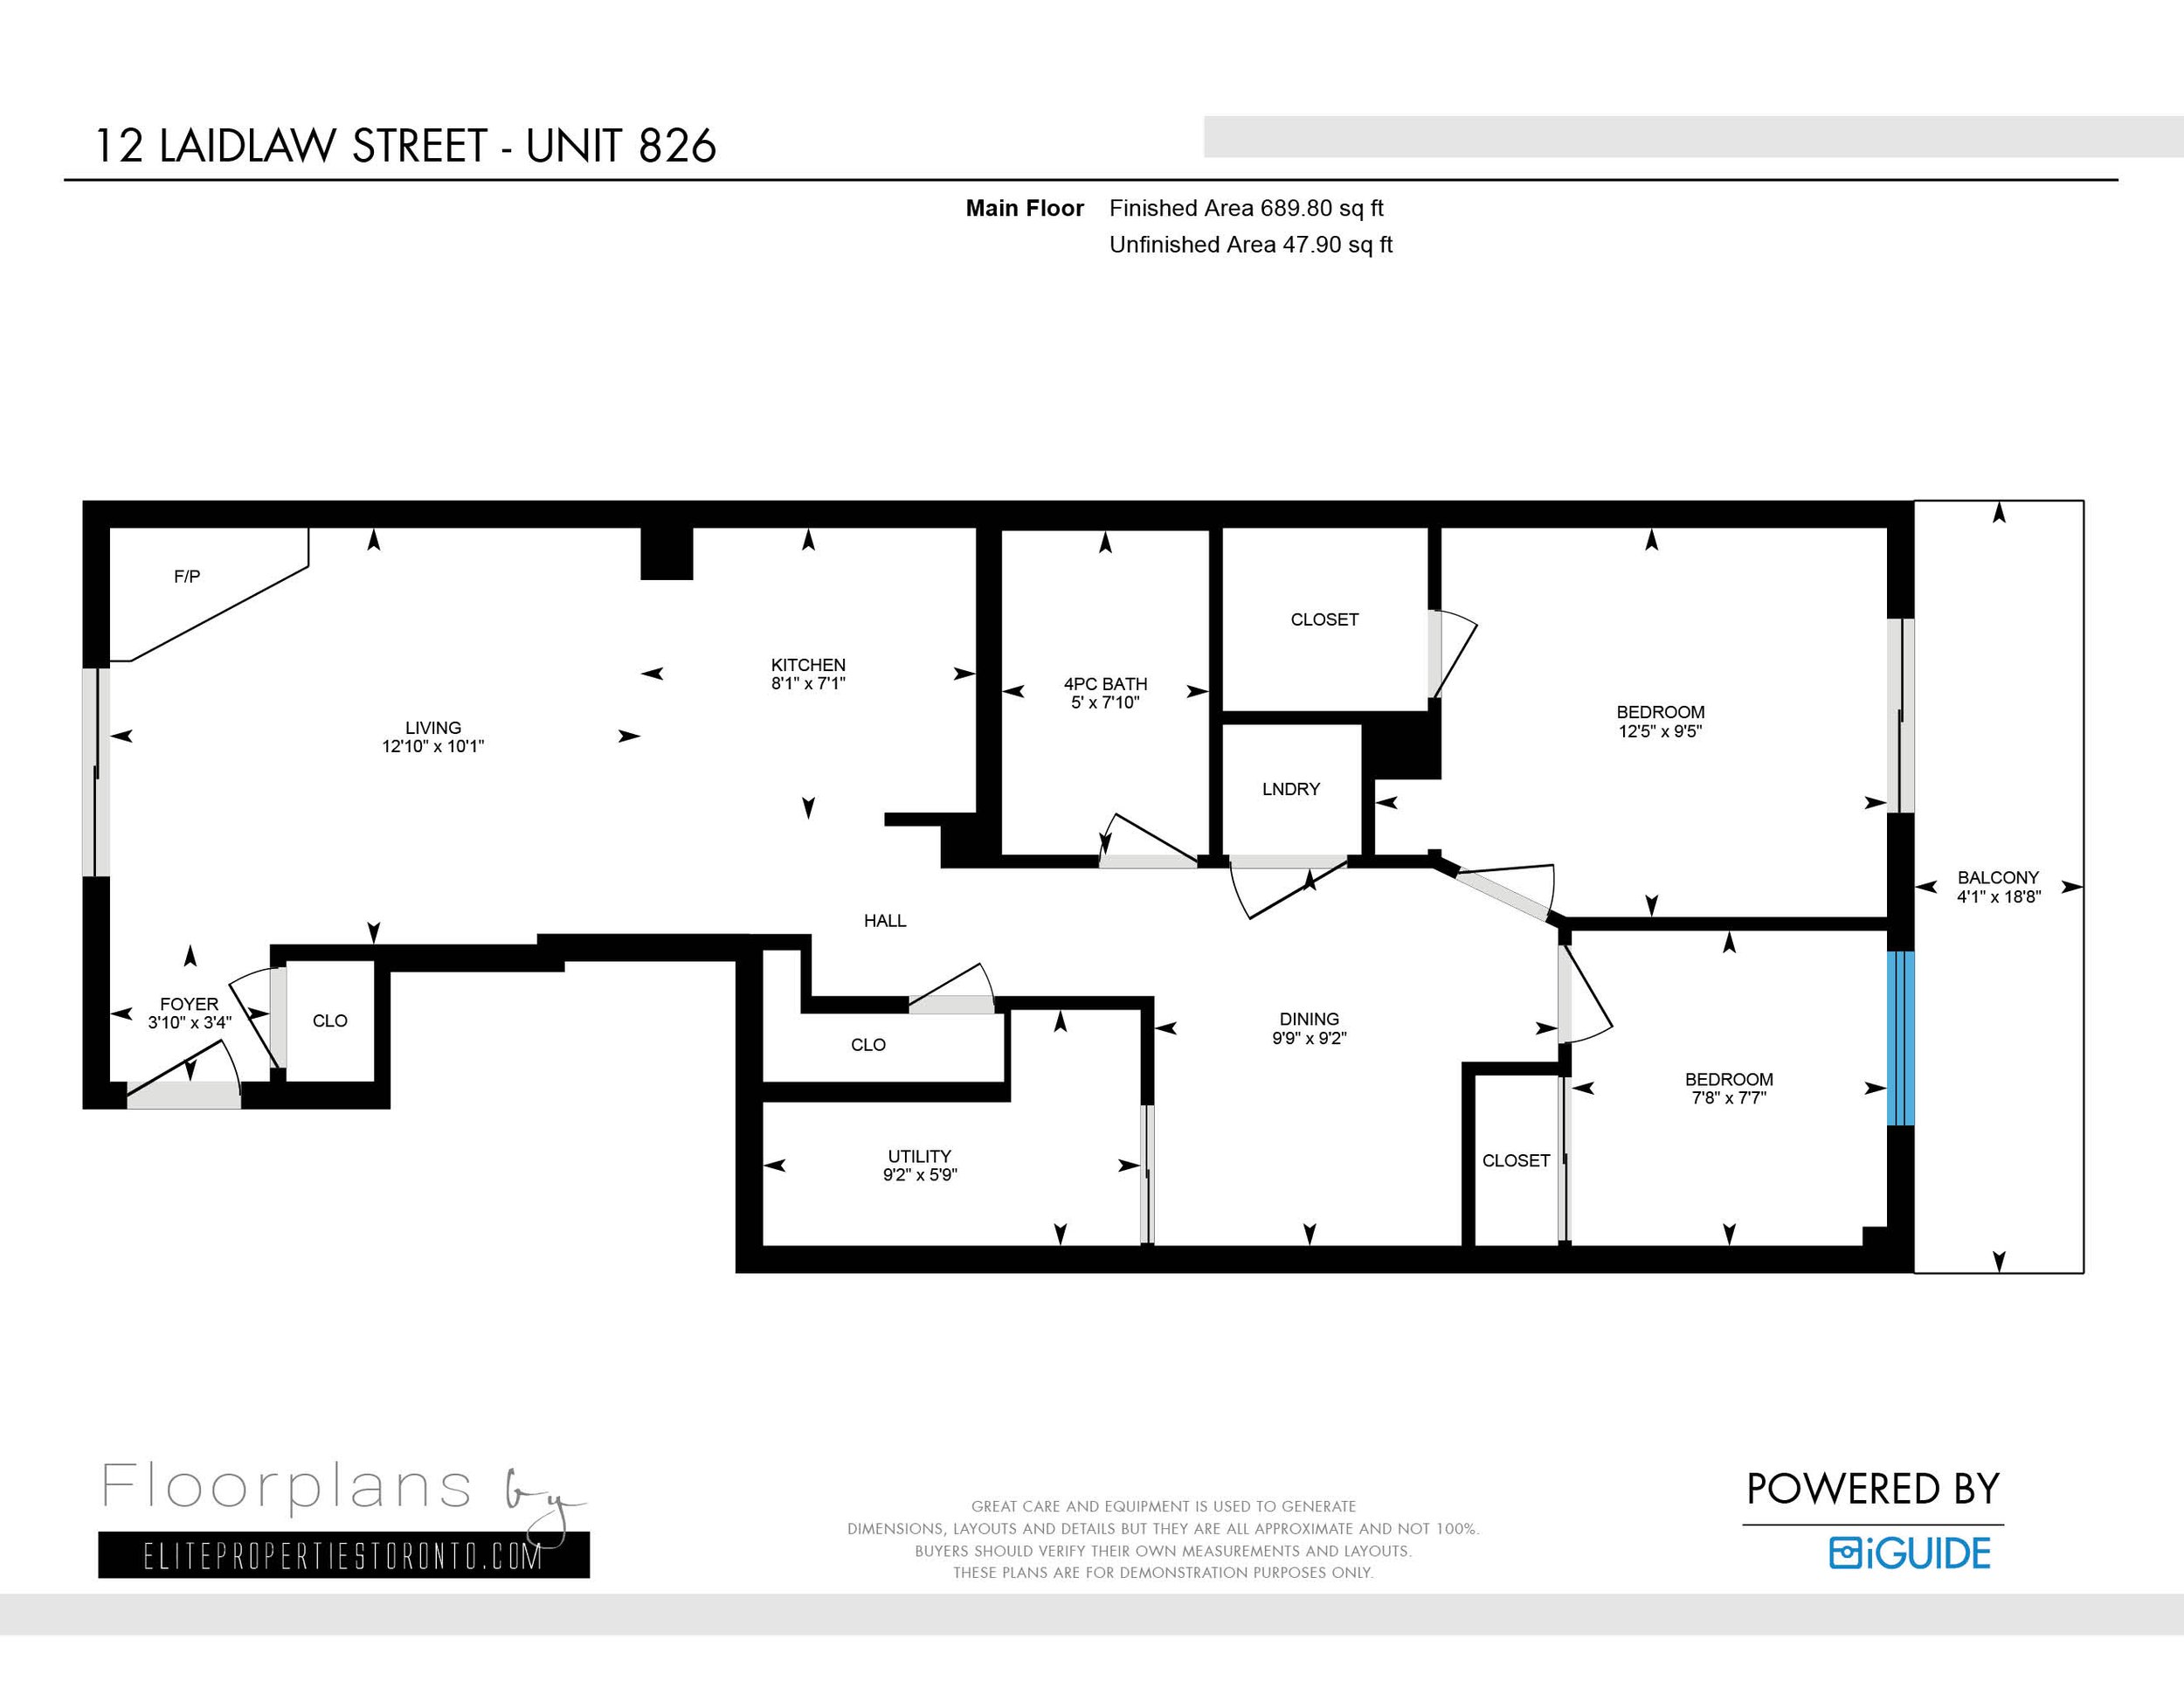 UPLOAD Floor plans By Elite Properties - 12 Laidlaw St Unit 826.jpg